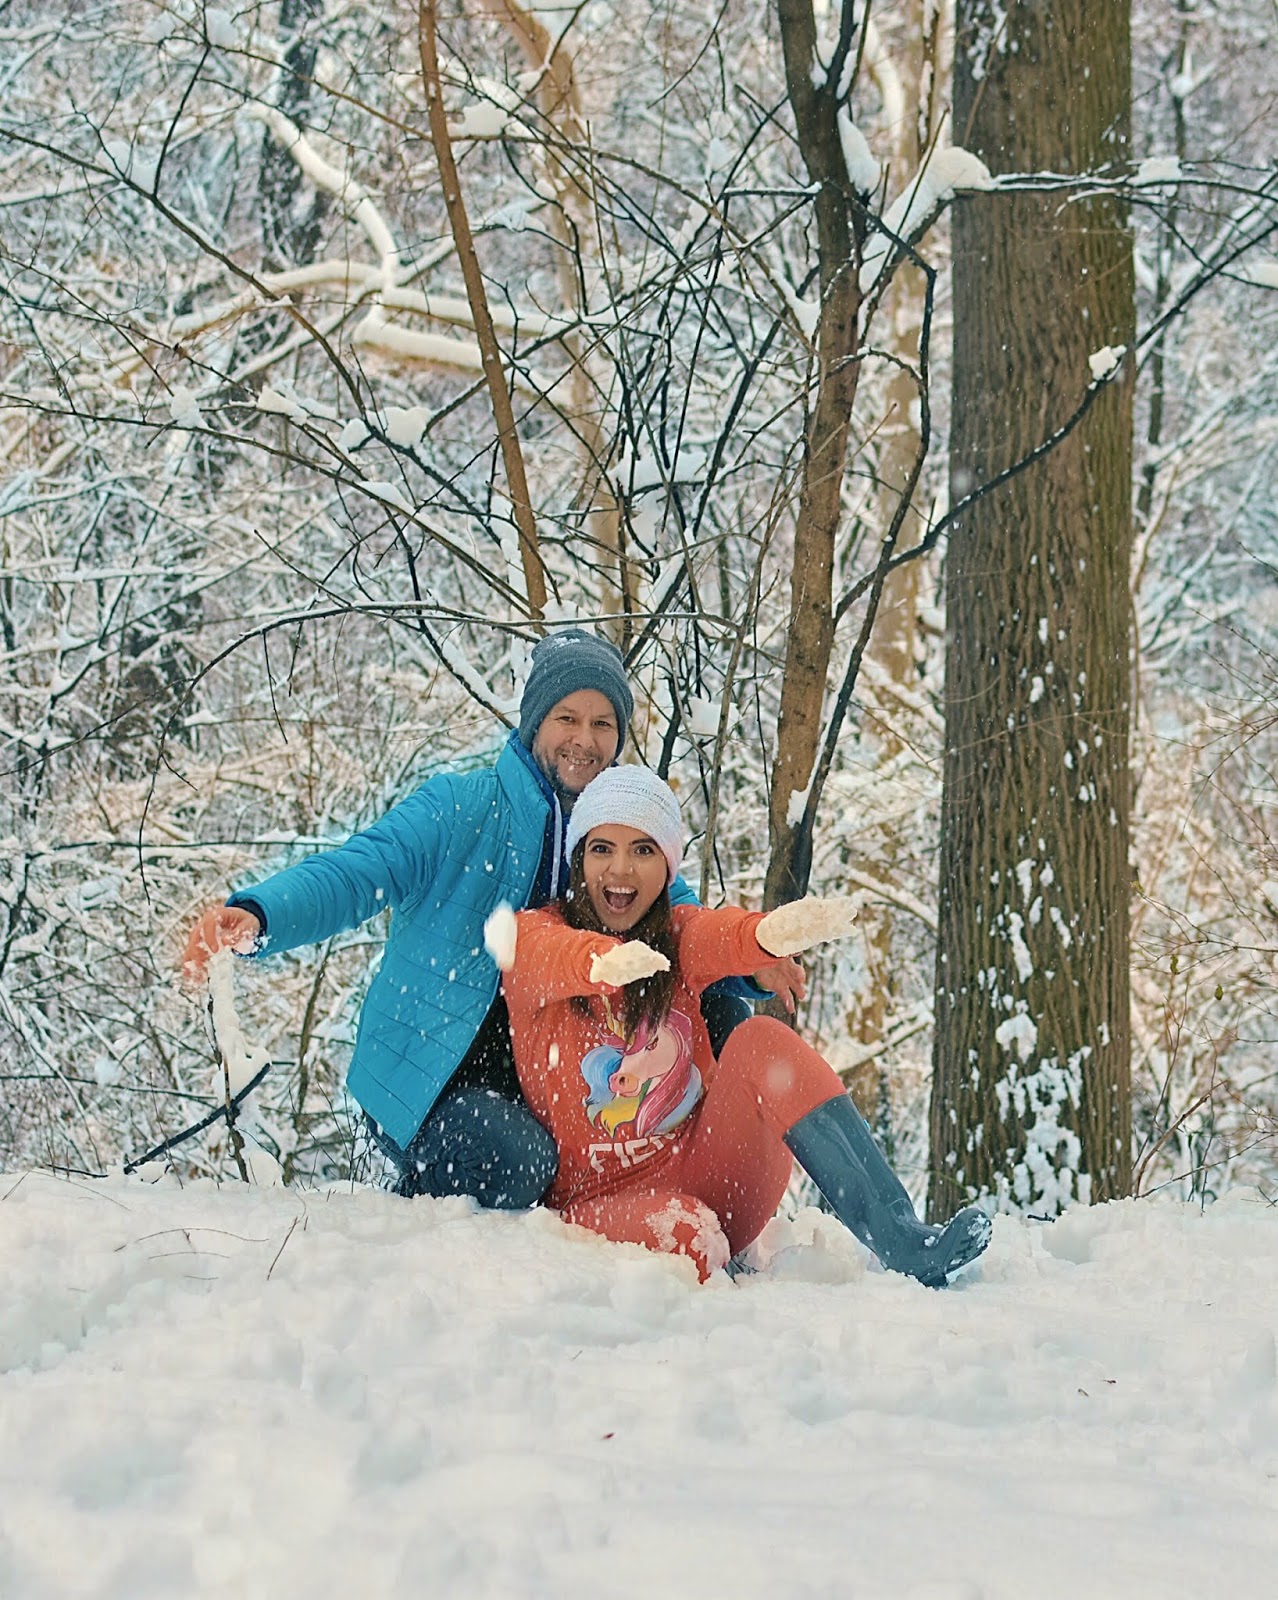 Spending time together by Mari Estilo - Winterwonderland-travelblogger-snowday